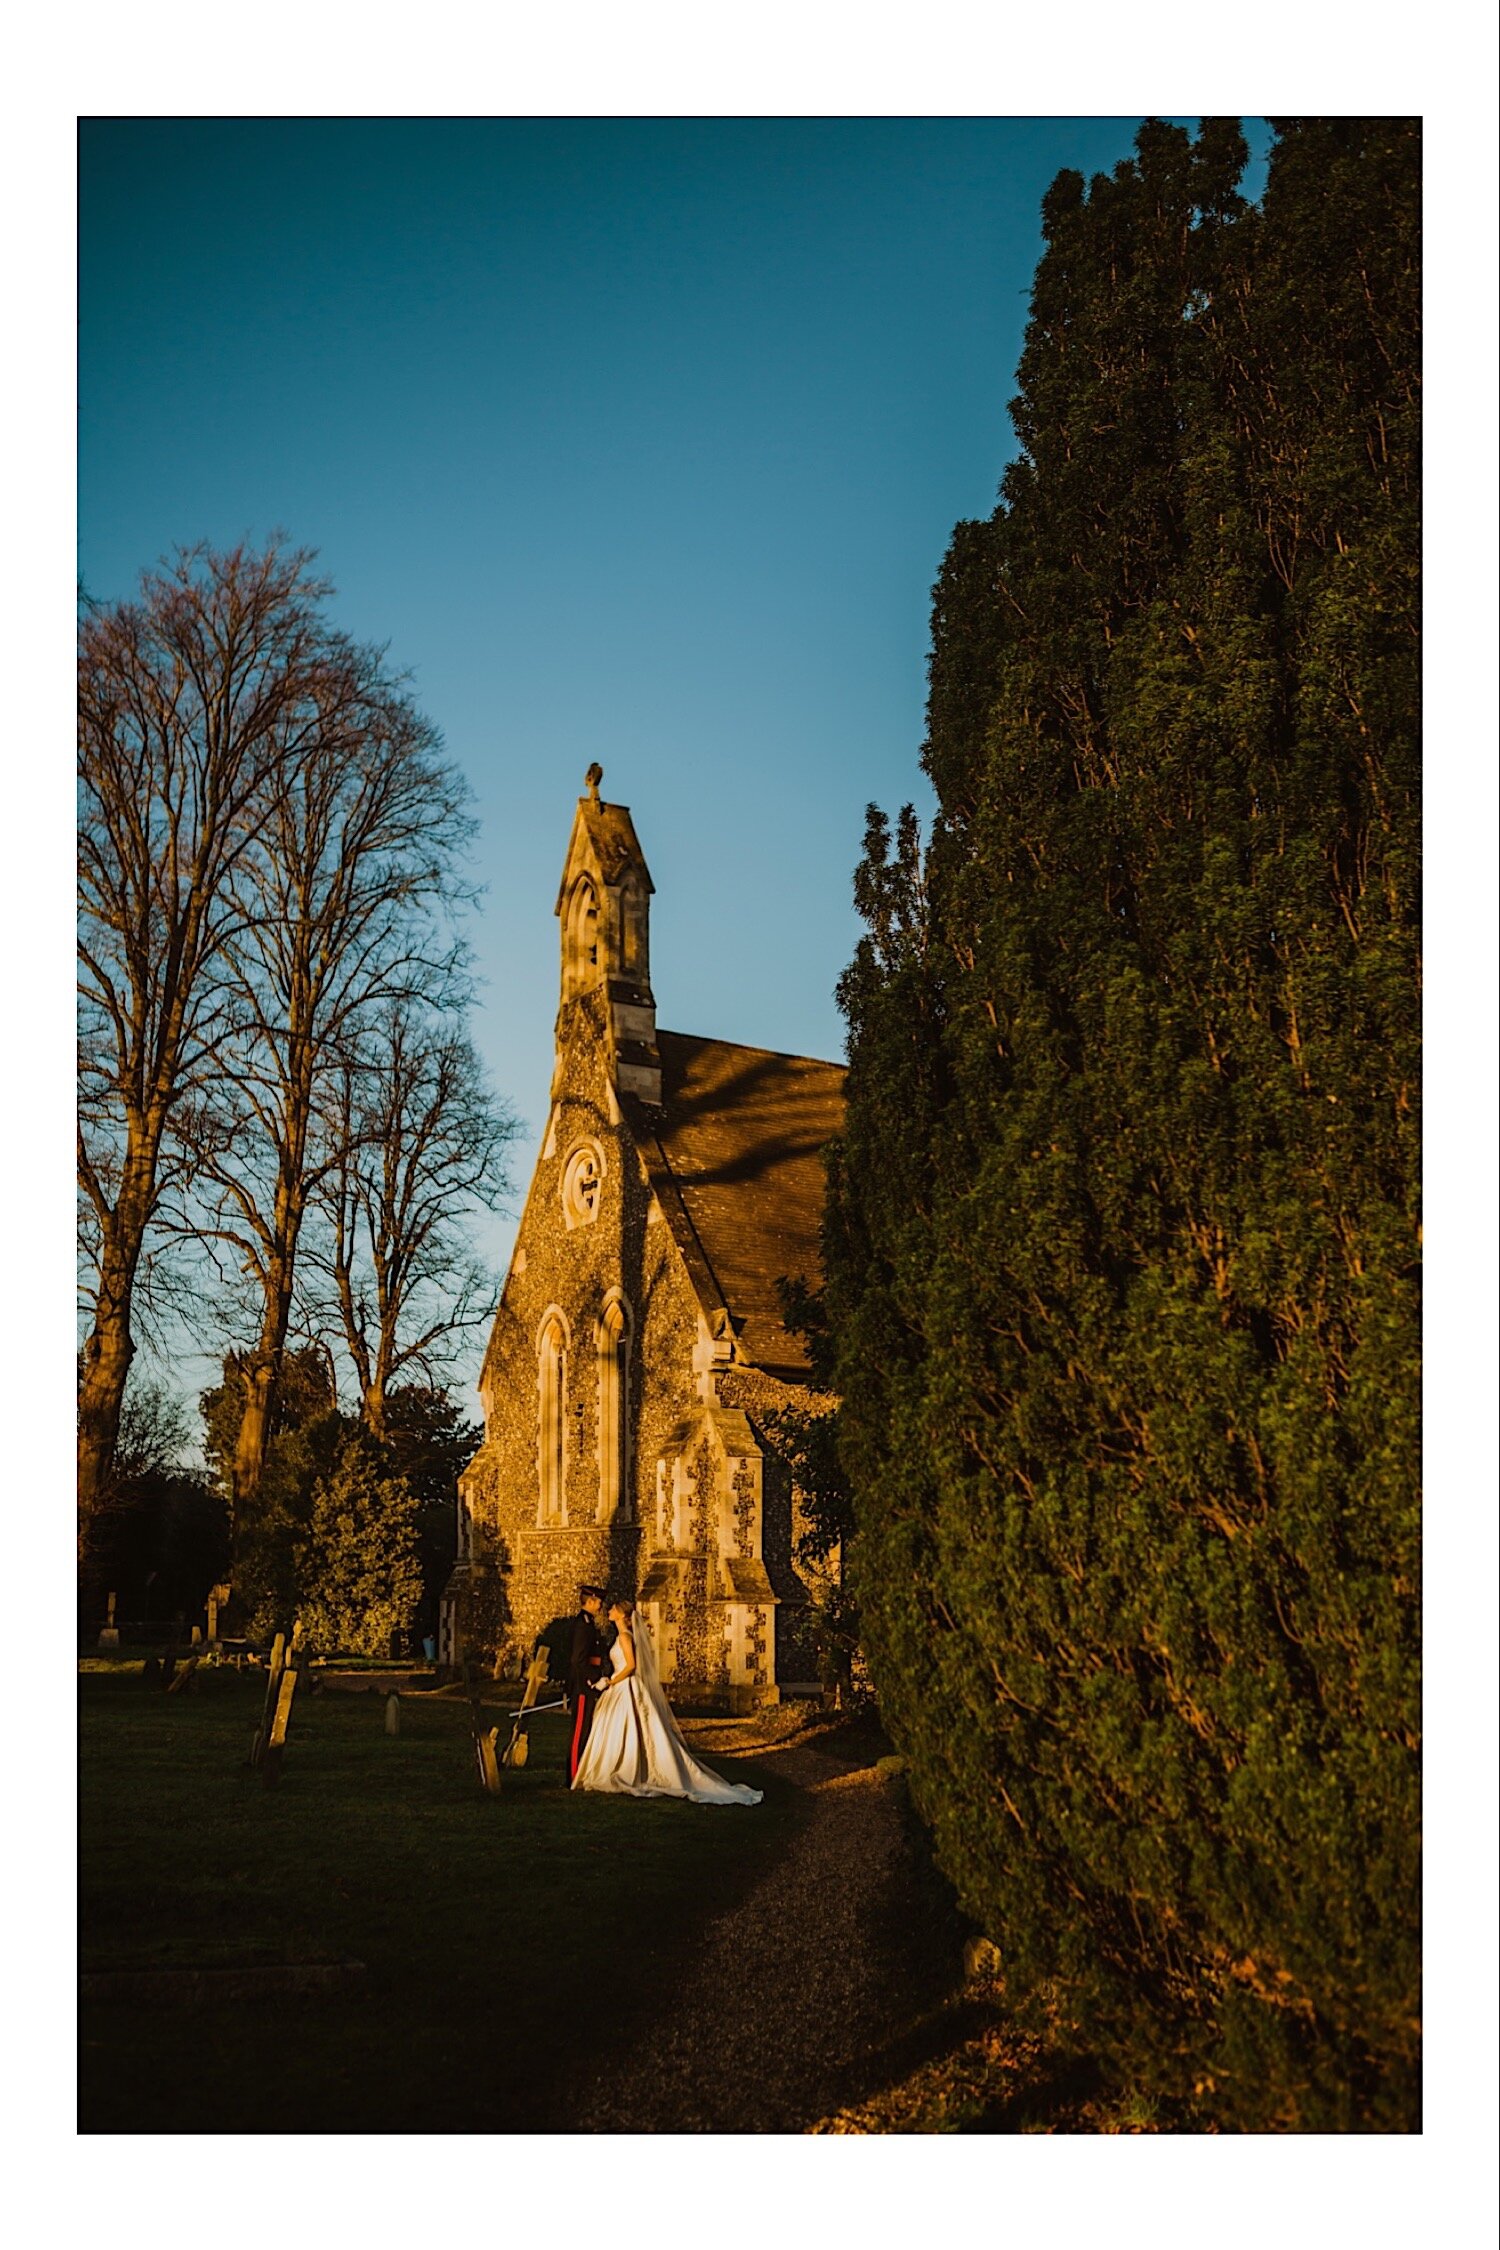 066_TWS-735_bride_church_hour_couple_photography_henley_oxfordshire_millitary_ceremony_sunset_golden_crooked_wedding_portraits_groom_winter_billet.jpg